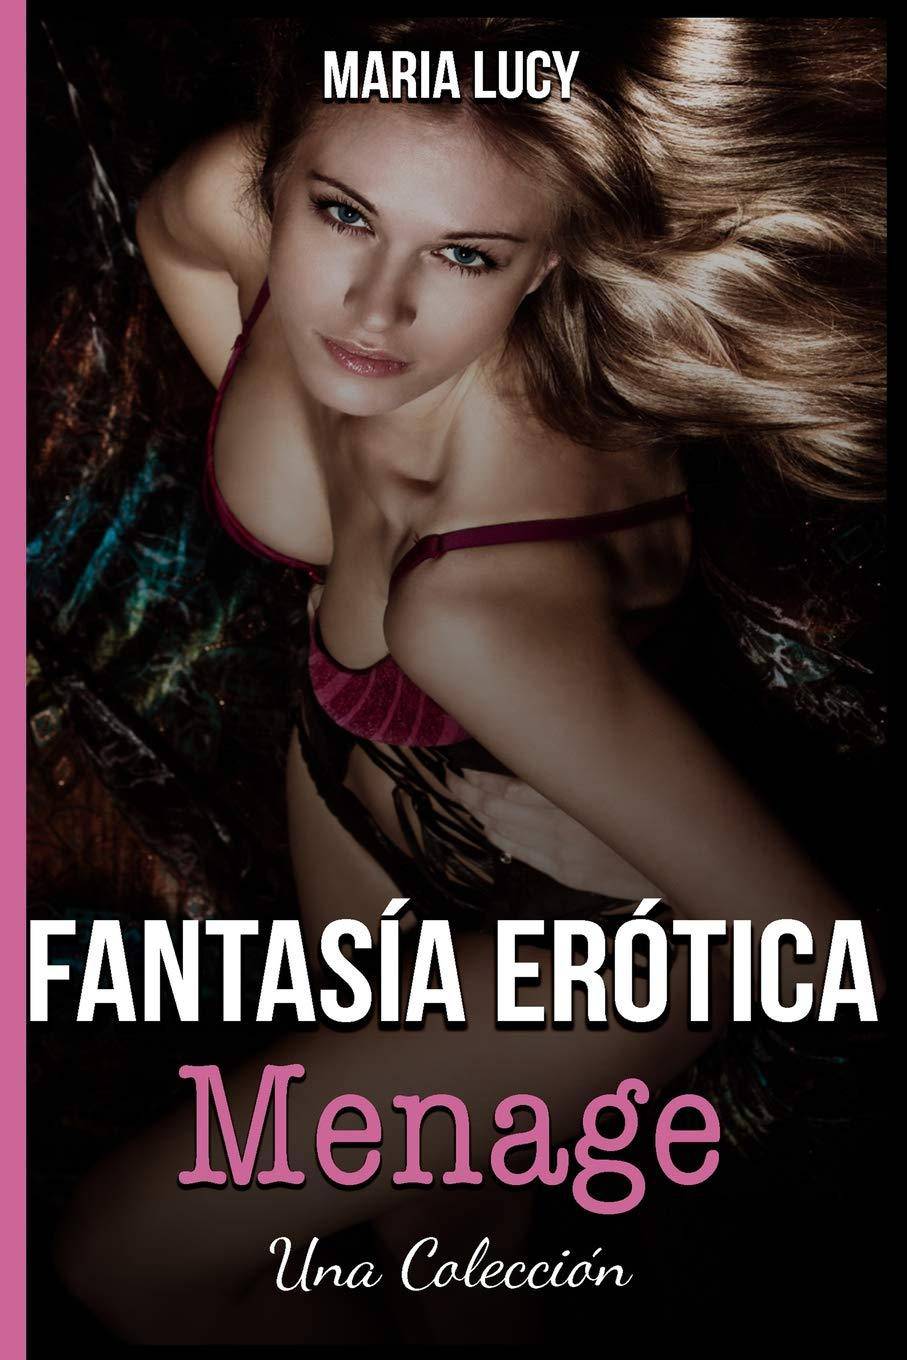 Fantasía Erótica Menage - SureShot Books Publishing LLC